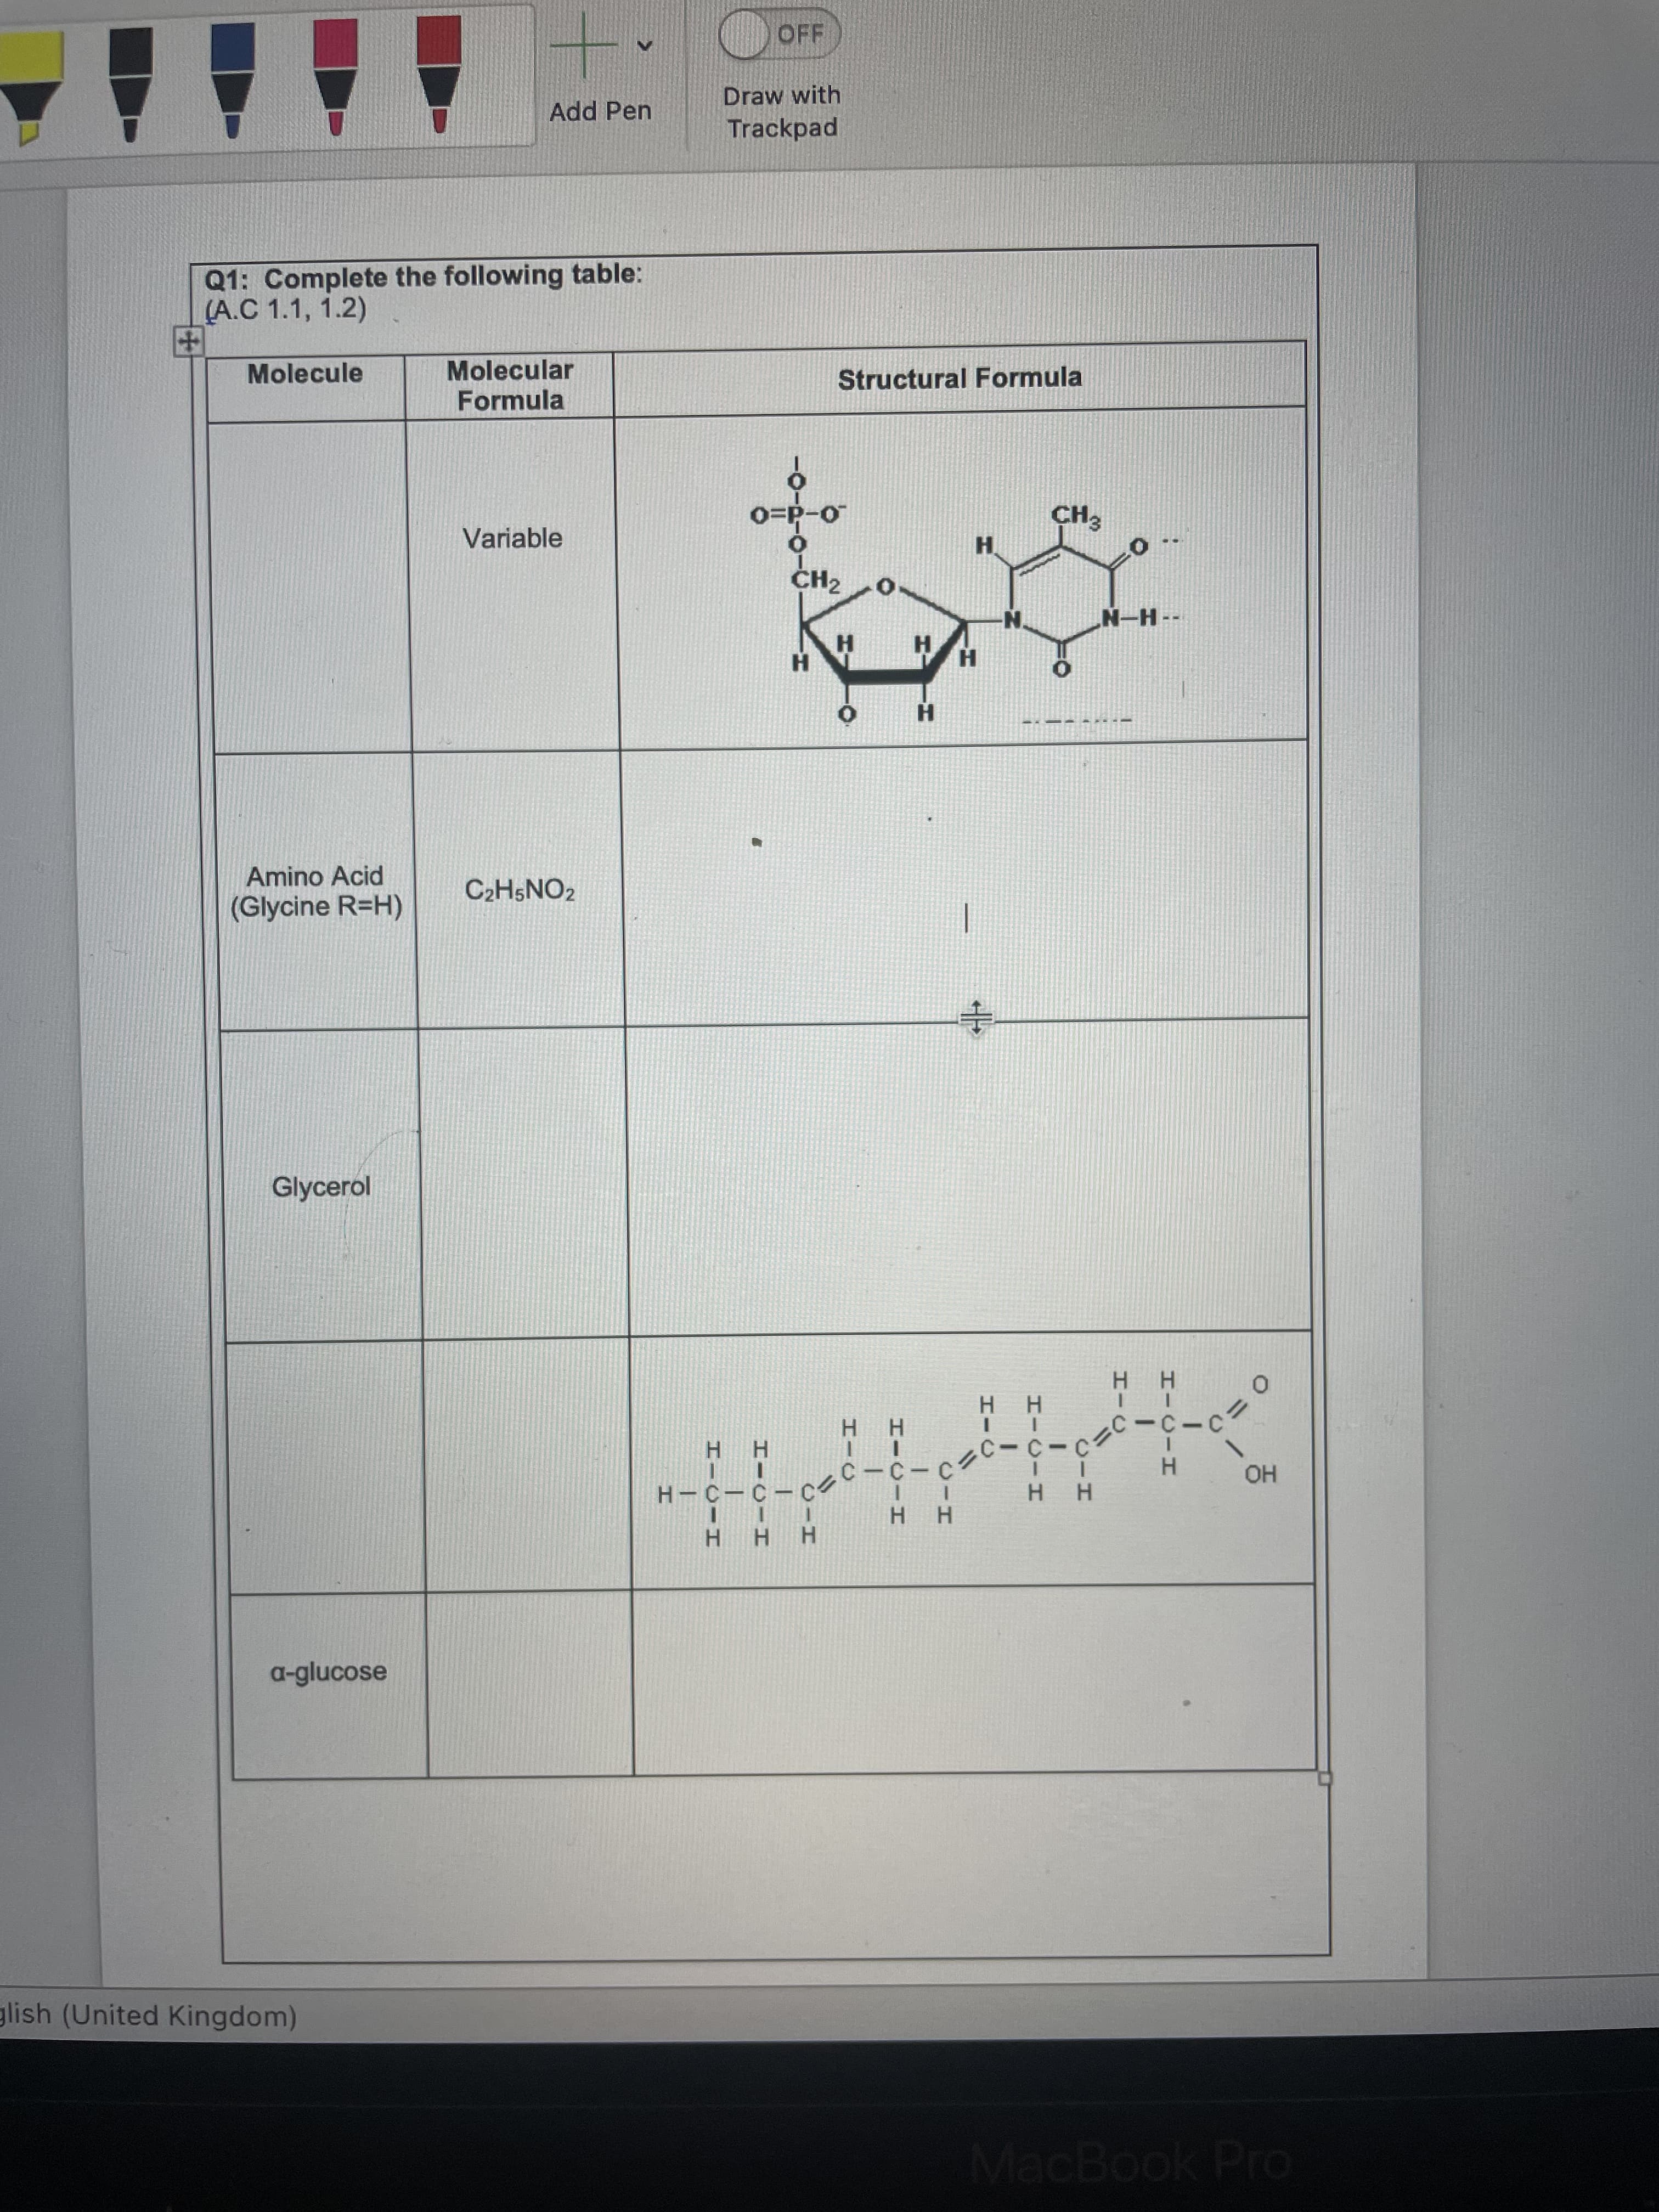 OFF
Draw with
Add Pen
Trackpad
Q1: Complete the following table:
(A.C 1.1, 1.2)
Molecular
Formula
Molecule
Structural Formula
o-d=0
CH2
CH3
Variable
H.
--H-N
H.
H.
H
1--
Amino Acid
C2H5NO2
(Glycine R=H)
Glycerol
H H
.
H H
HH
H H
но
.
H H
H H
H HH
a-glucose
glish (United Kingdom)
MacBook Pro
